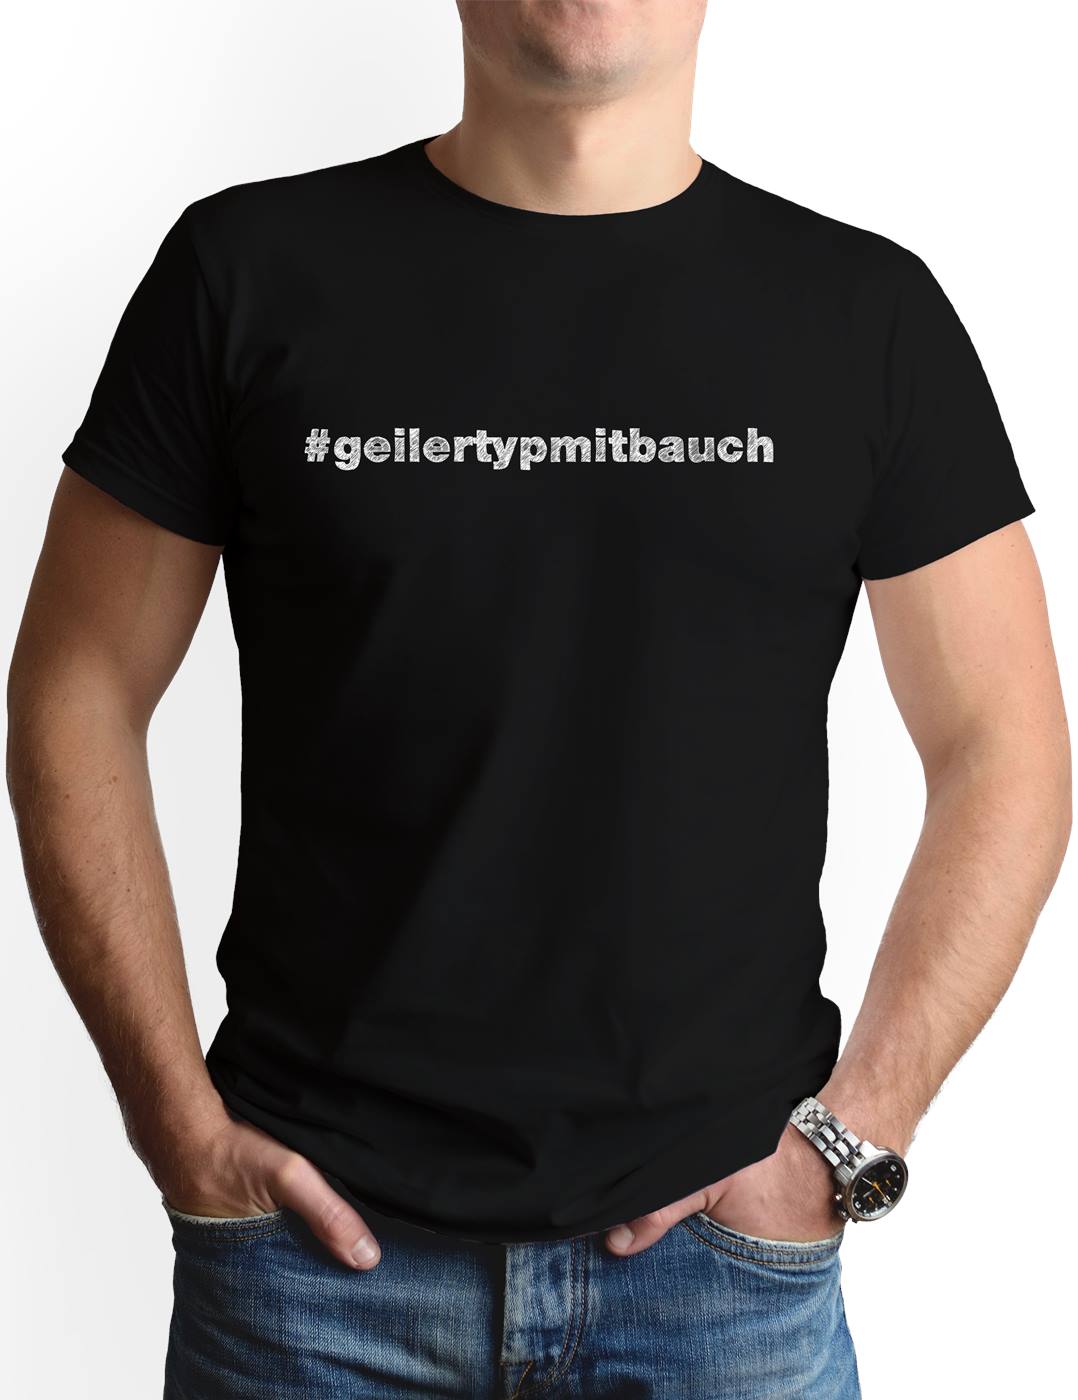 Bild: T-Shirt Herren - #geilertypmitbauch Geschenkidee